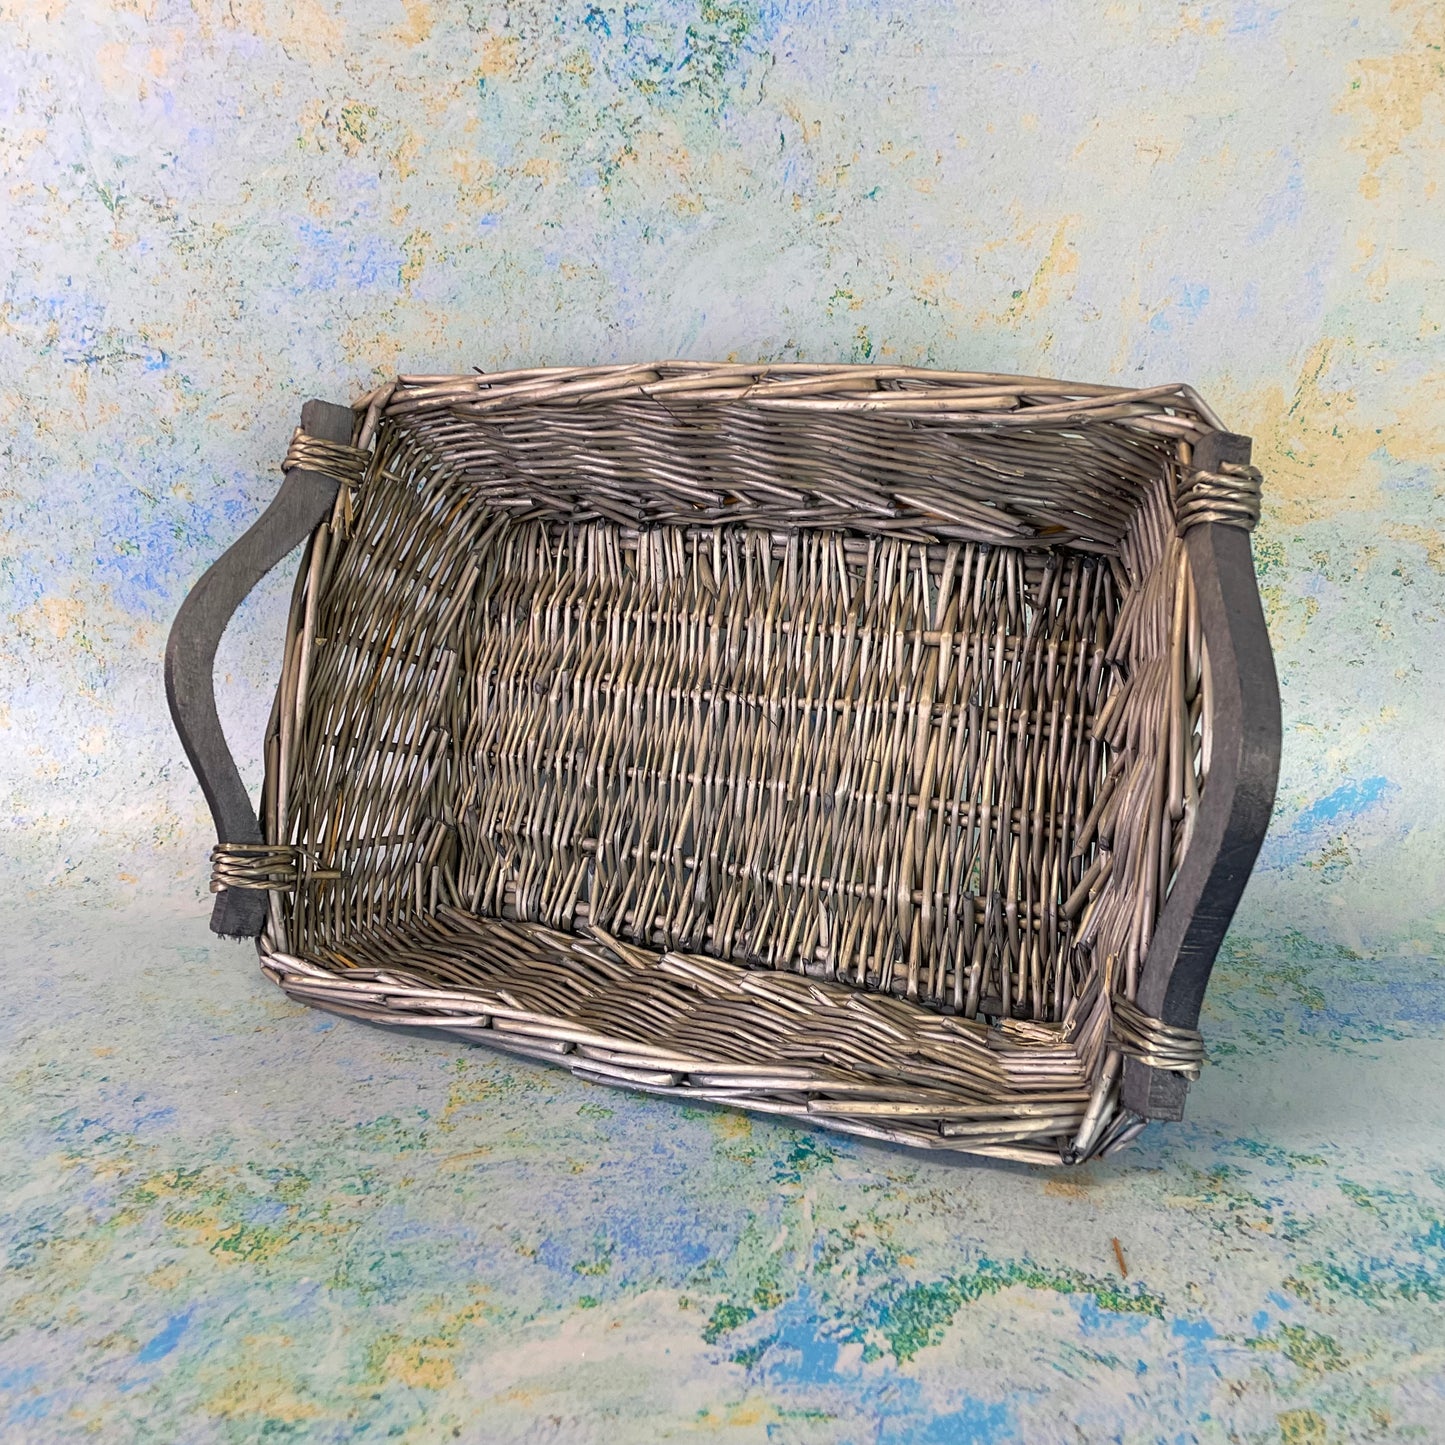 Winter Display Basket with Wooden Handles